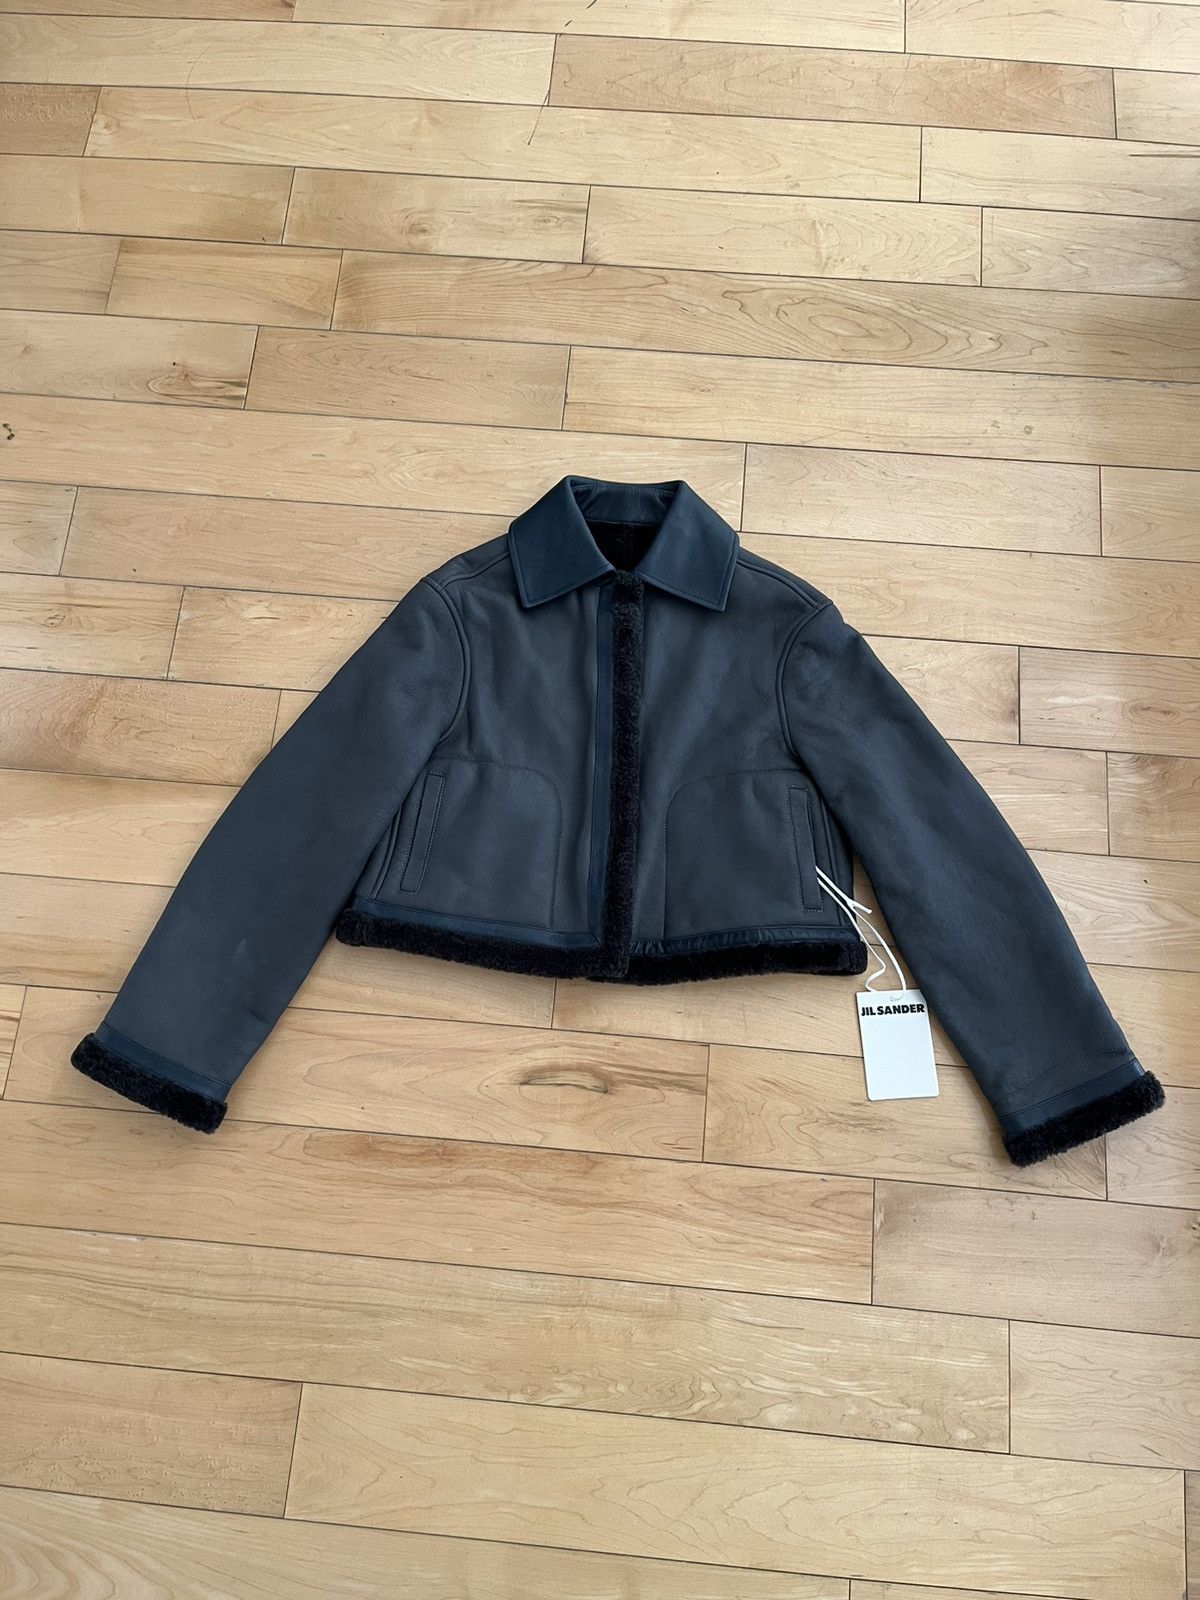 NWT - $8000 Jil Sander Cropped Leather jacket - 1